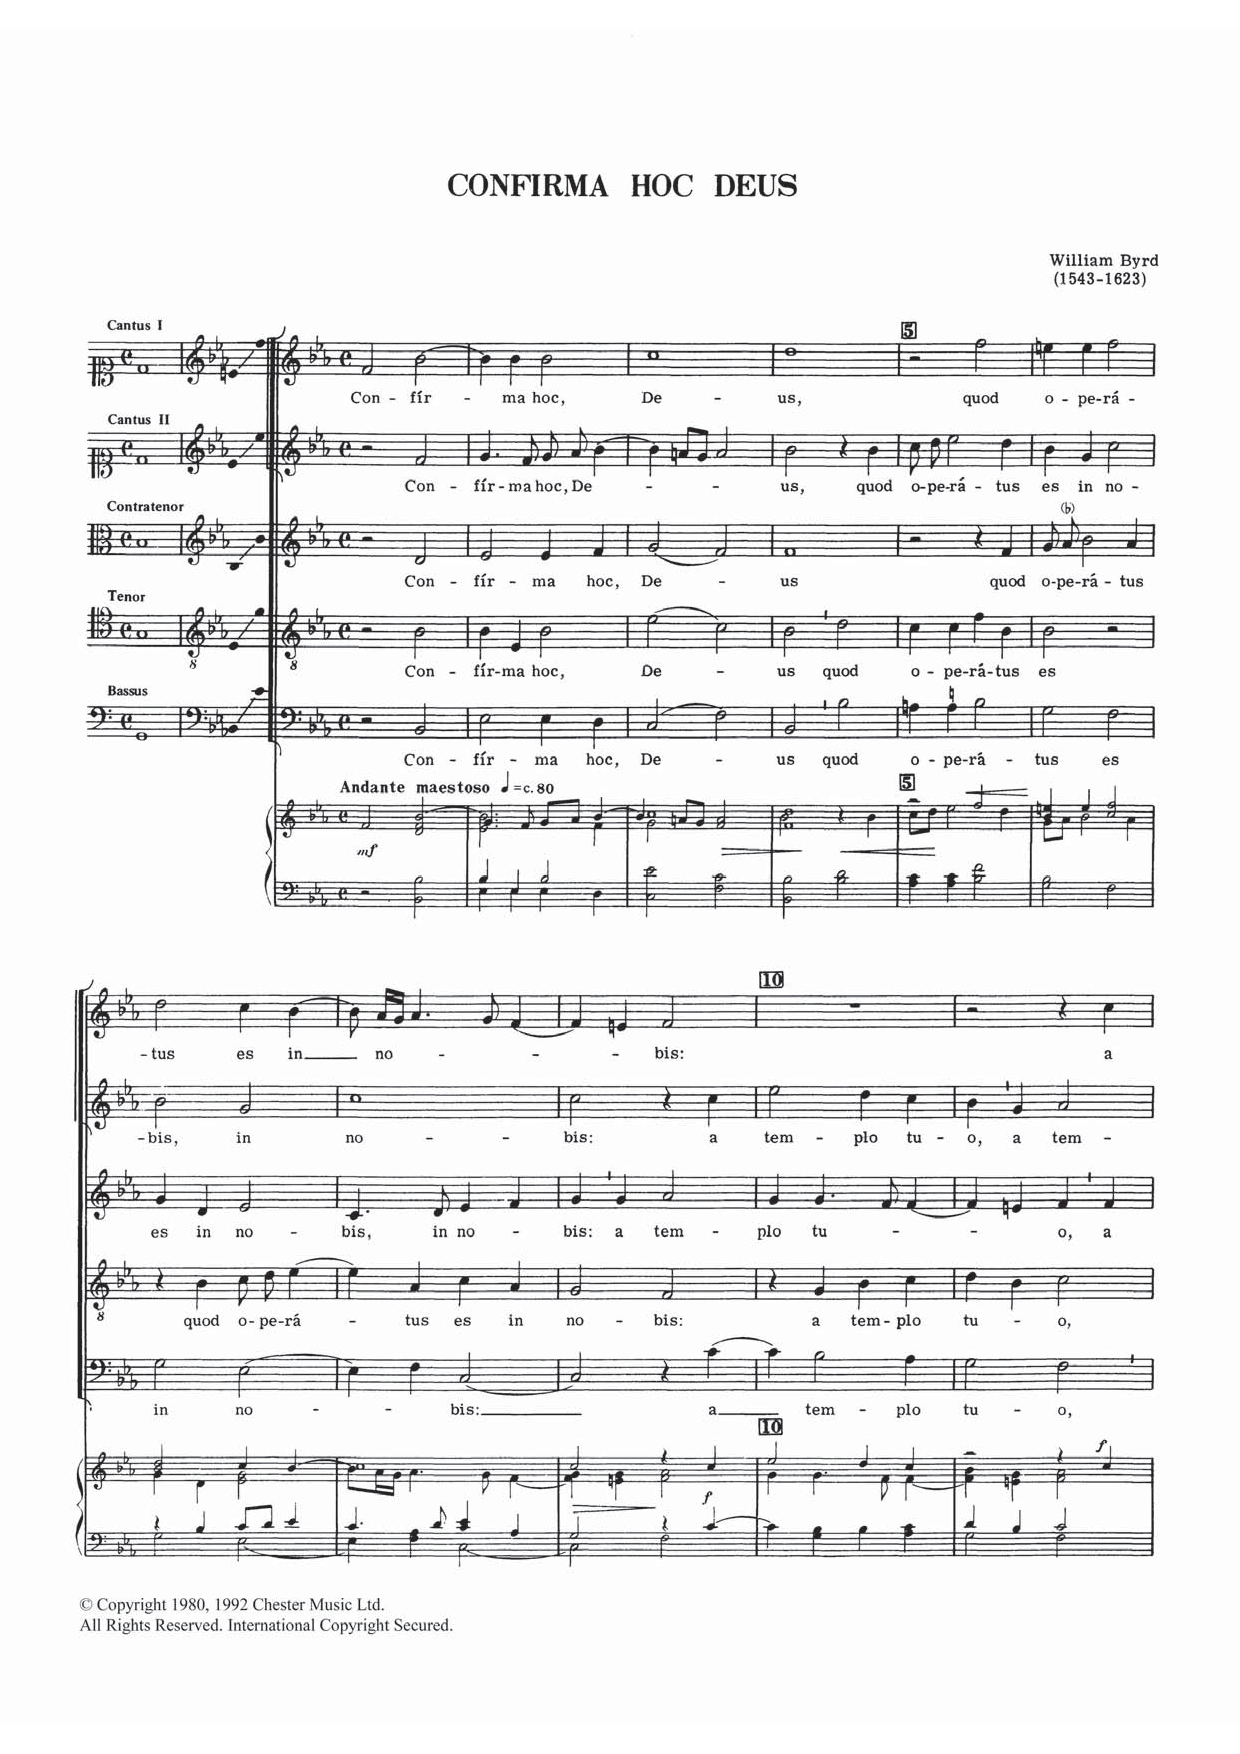 Download William Byrd Confirma Hoc Deus Sheet Music